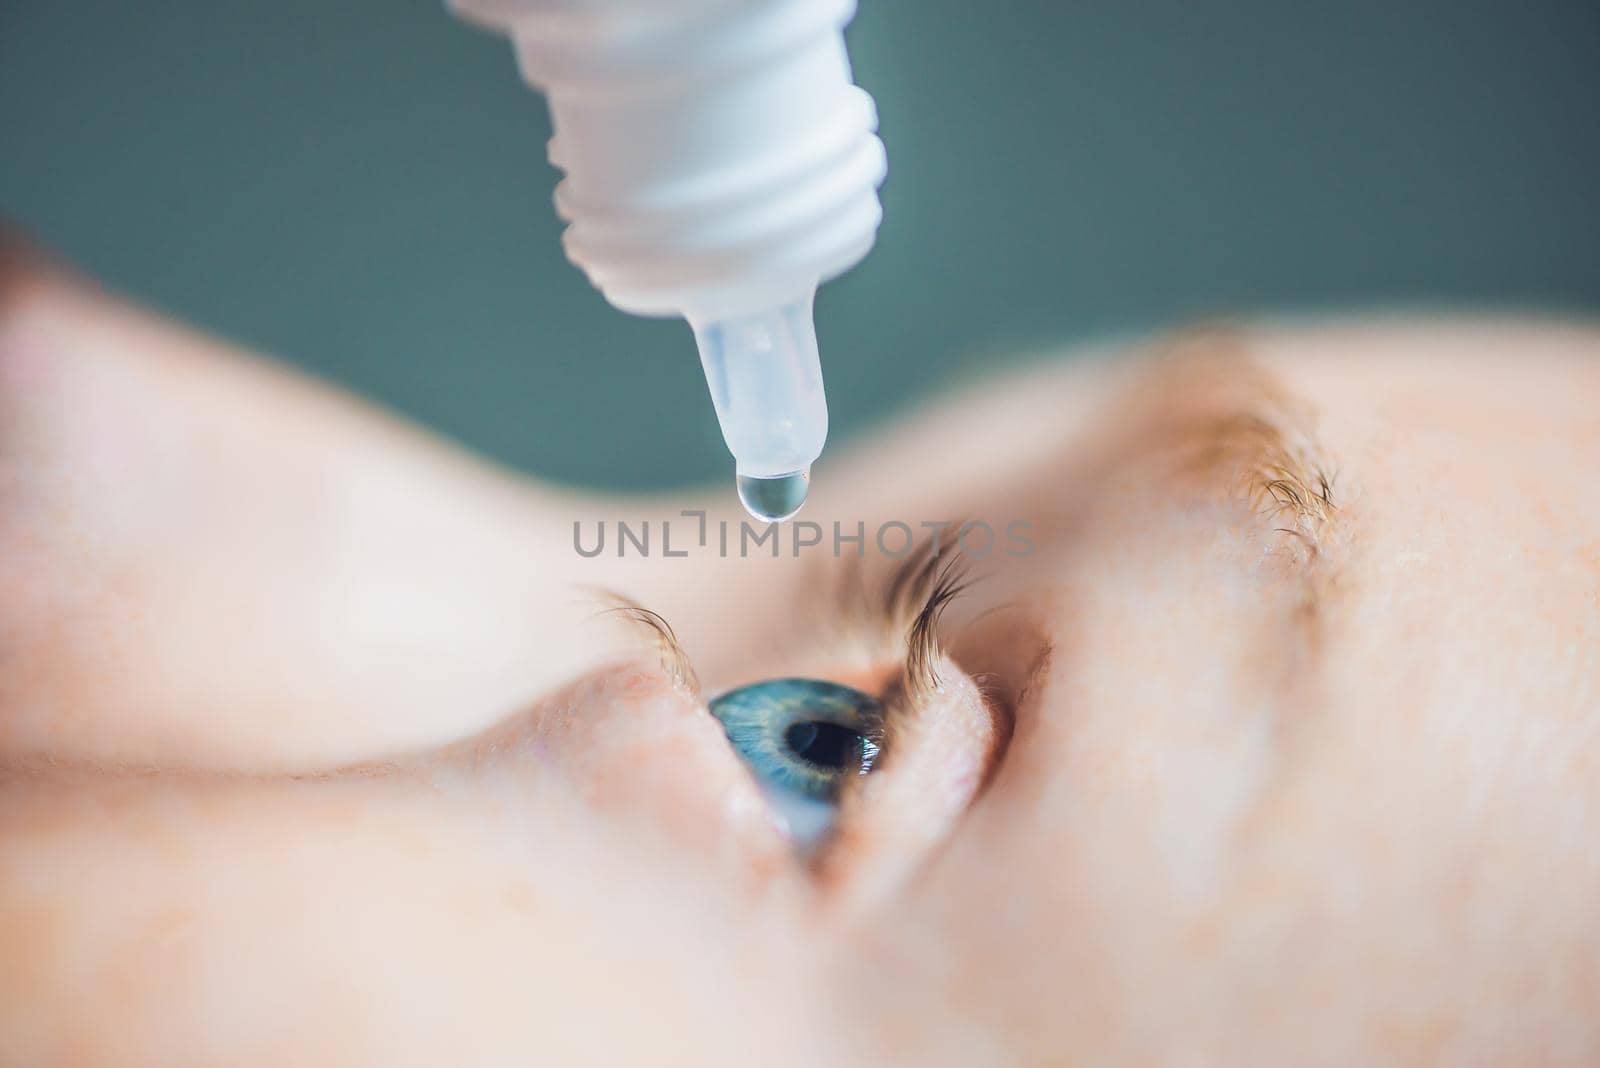 Closeup of eyedropper putting liquid into open eye by galitskaya